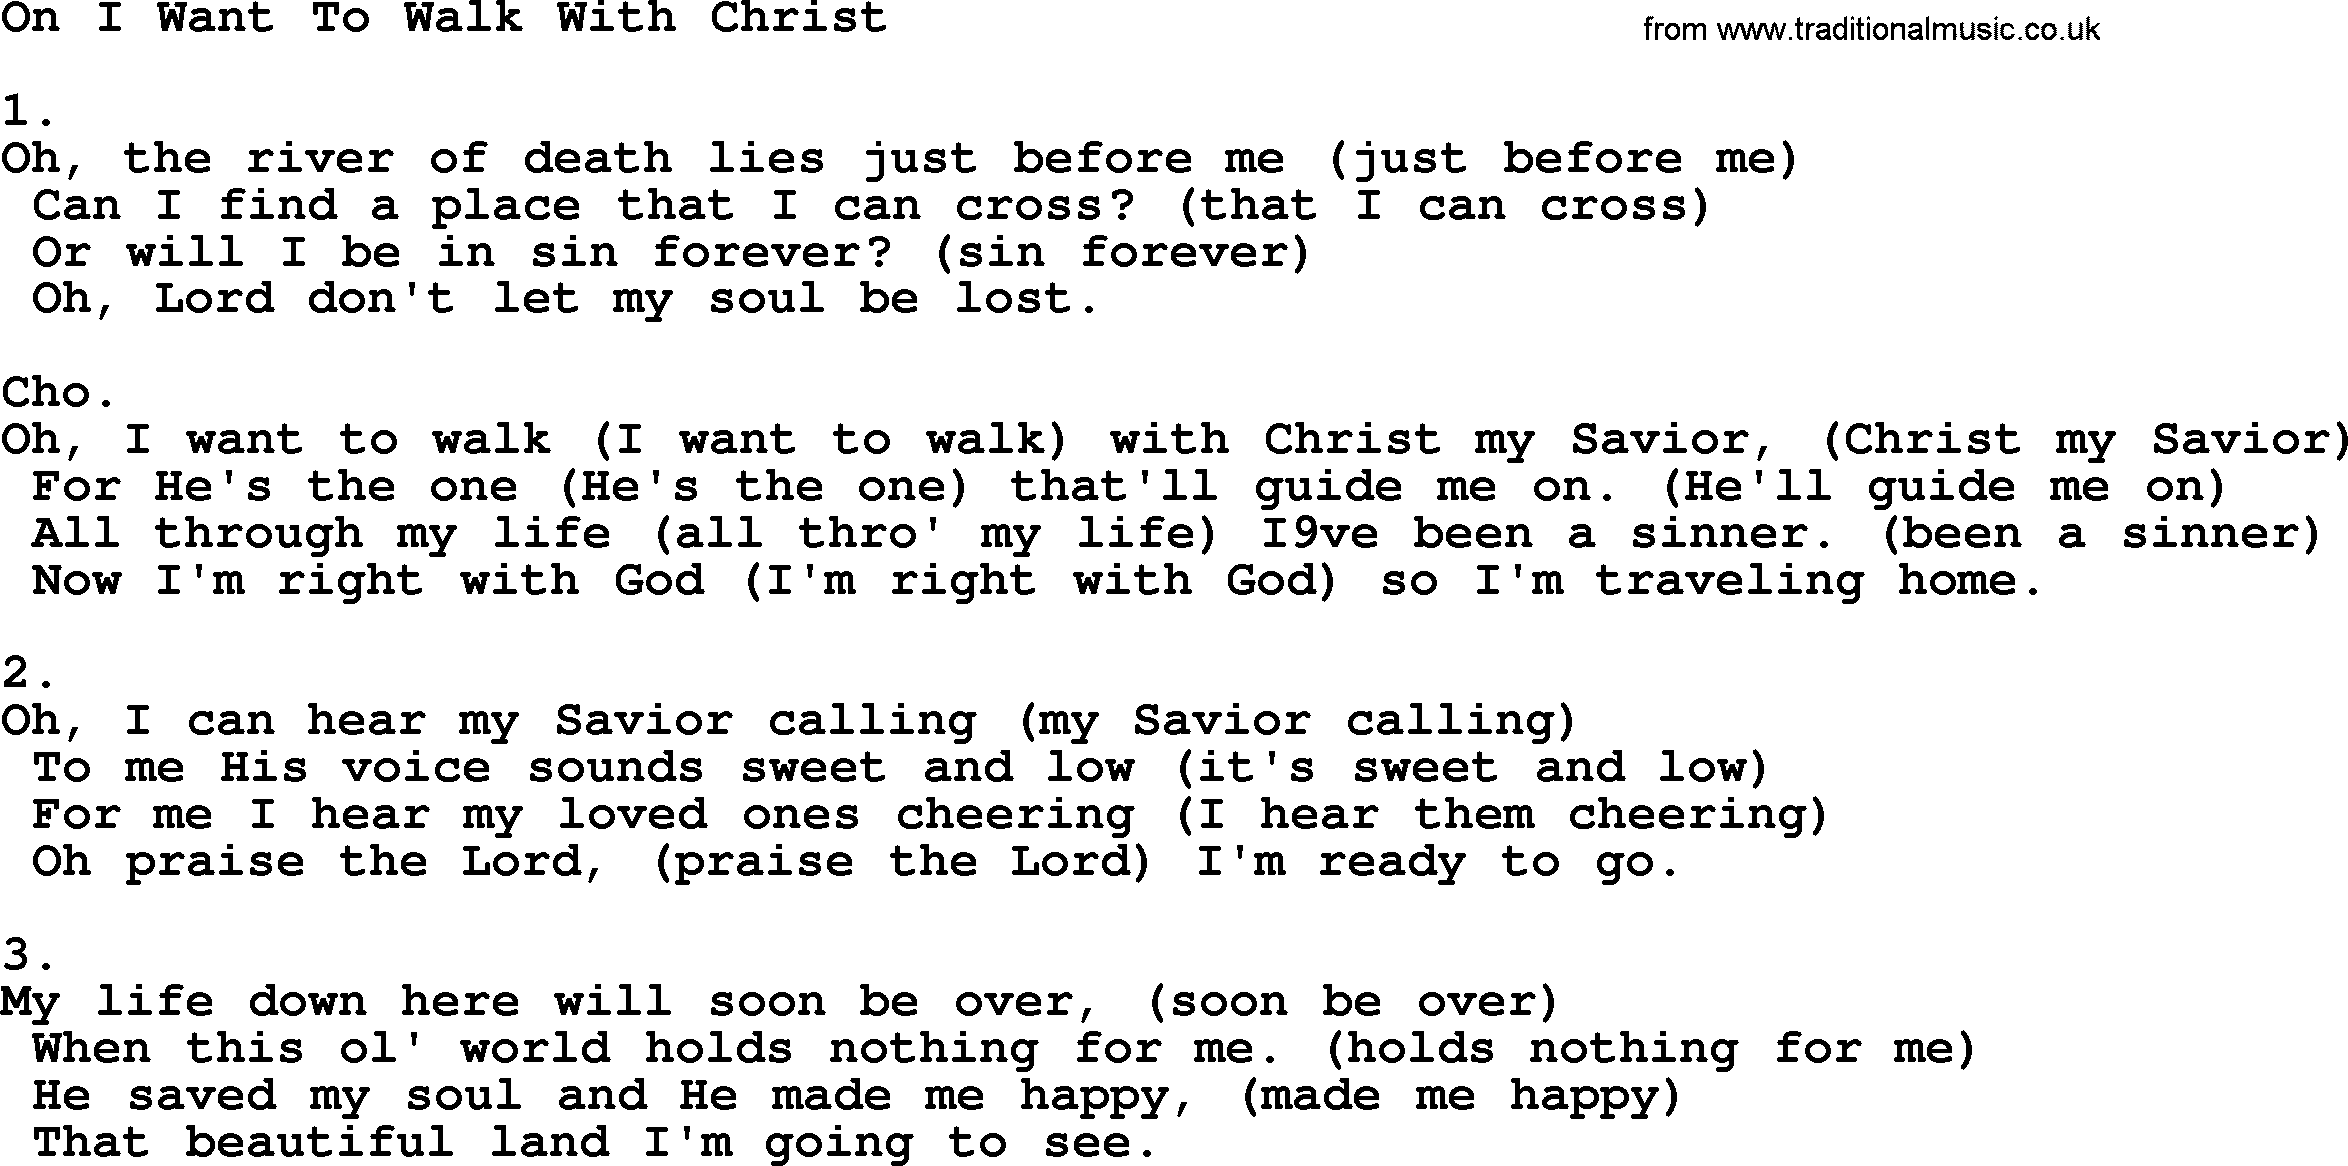 Apostolic & Pentecostal Hymns and Songs, Hymn: On I Want To Walk With Christ lyrics and PDF